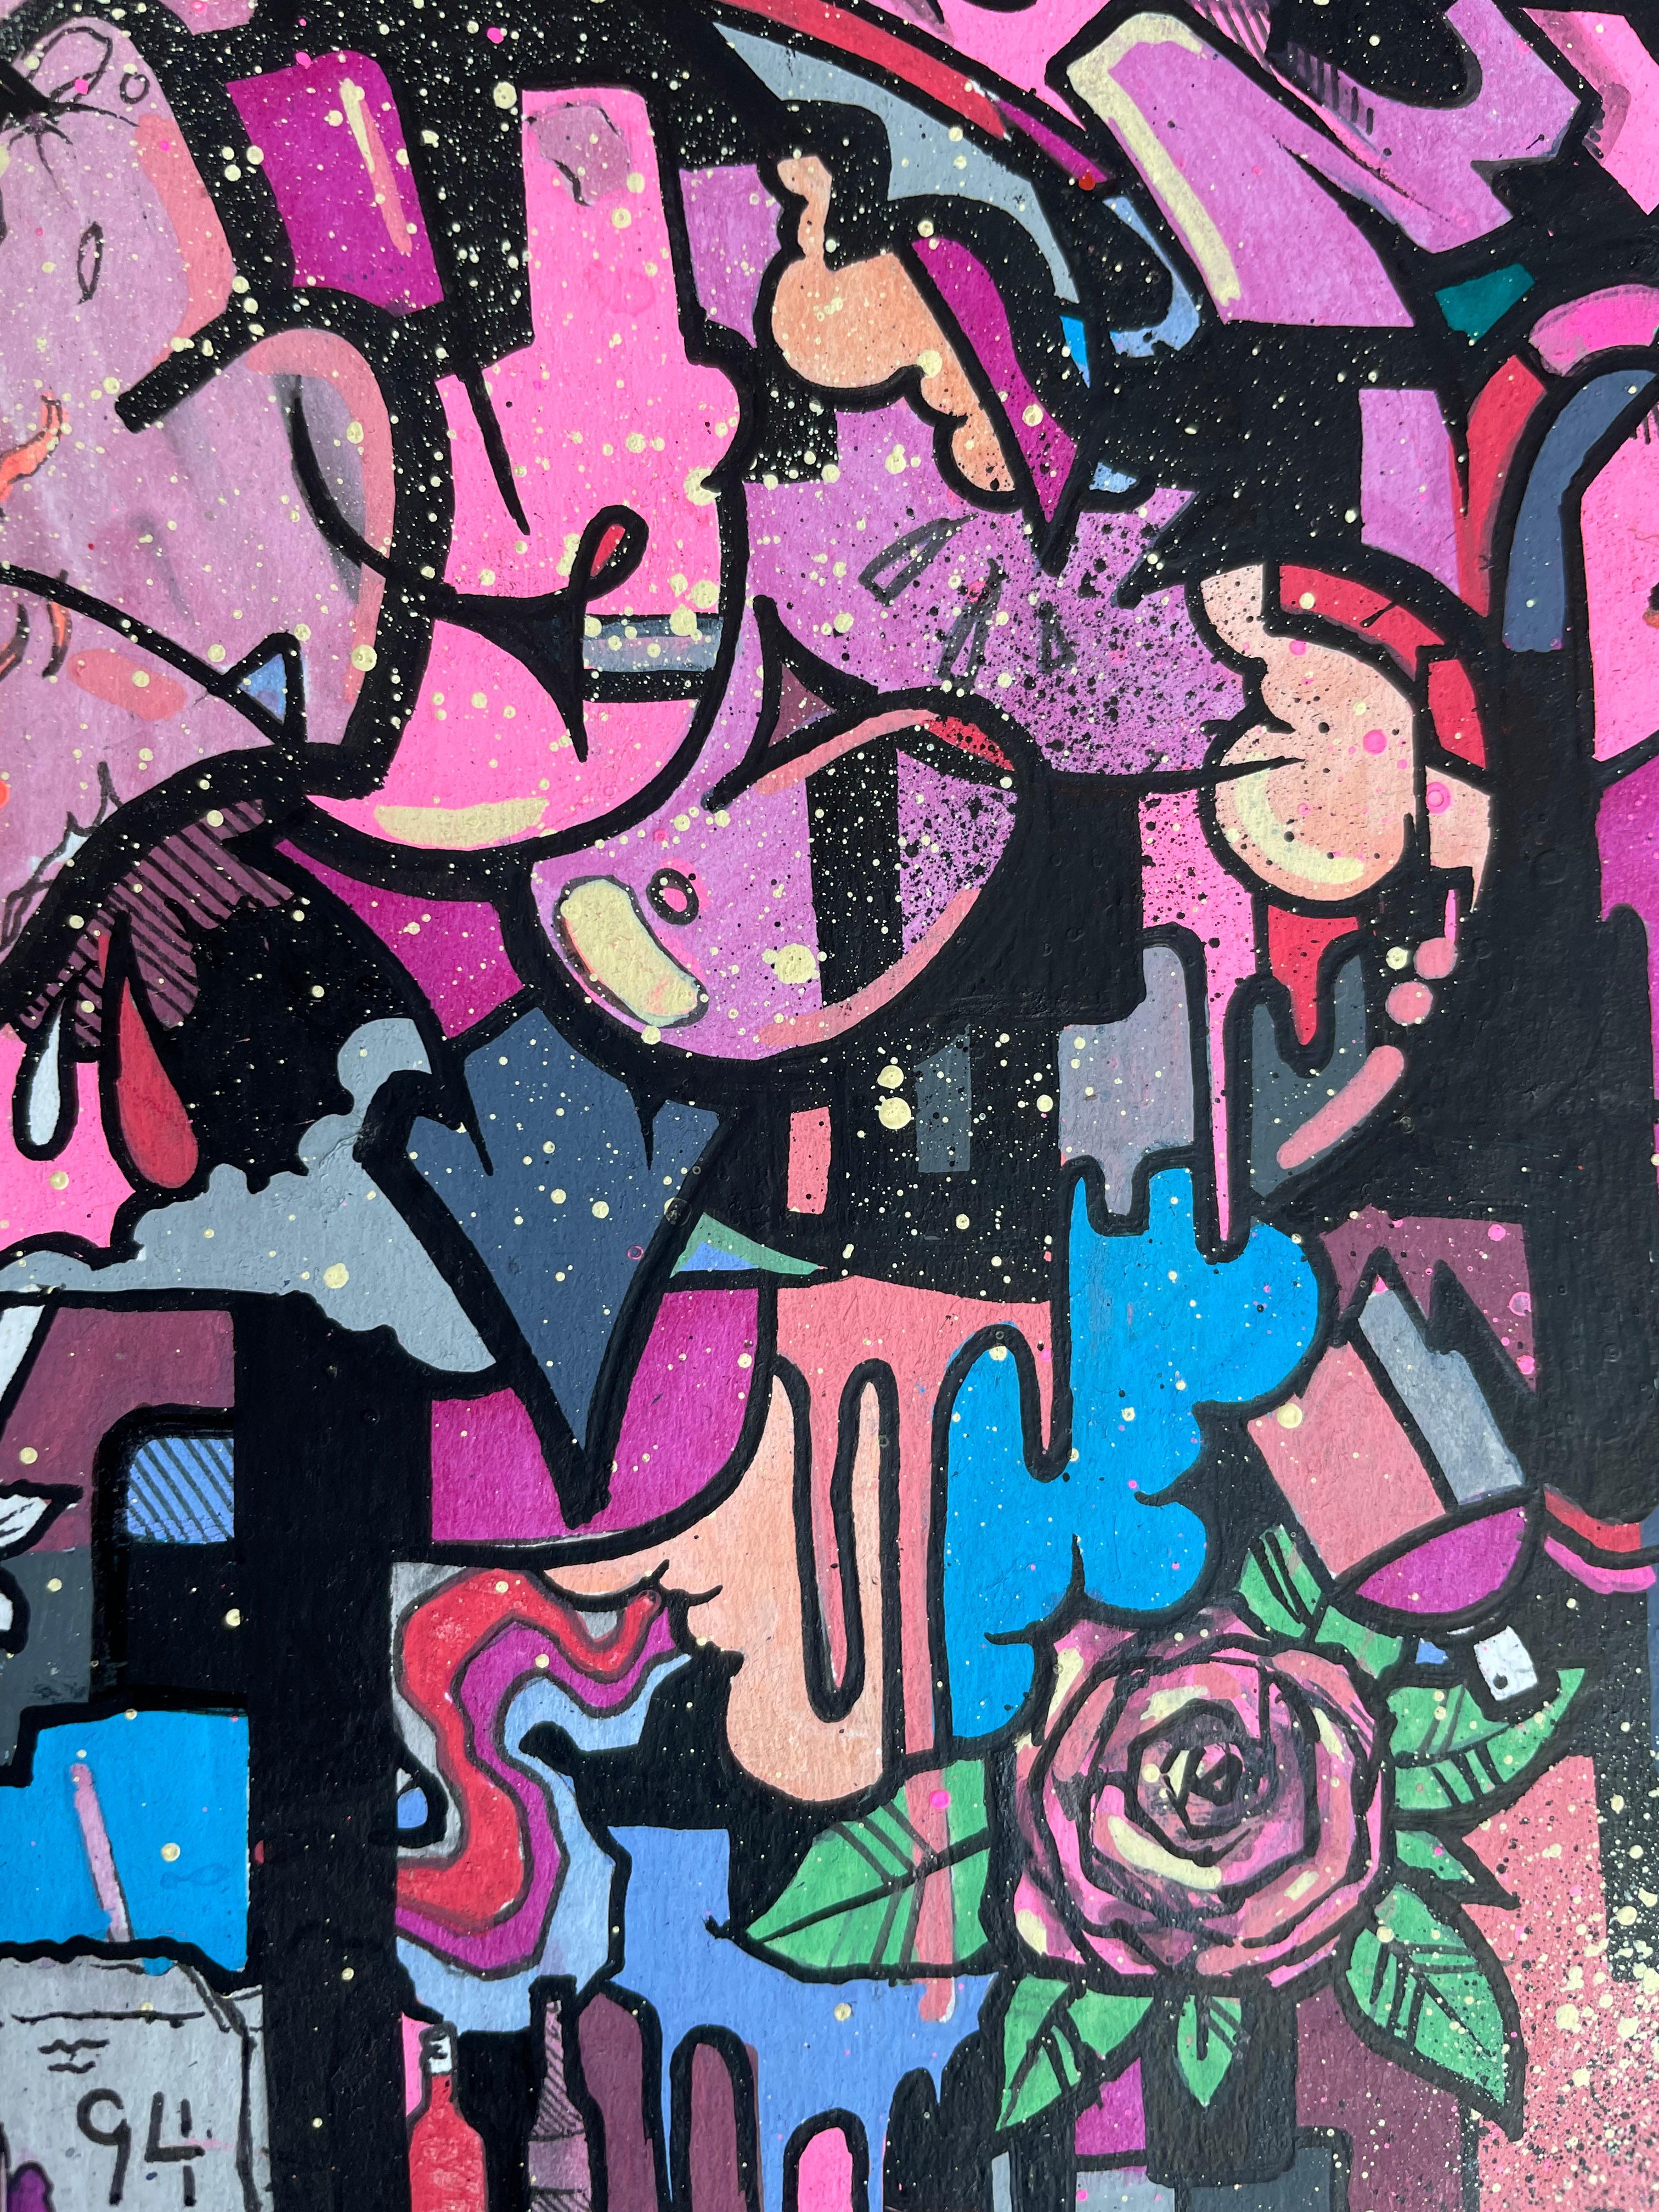 SHENANIGANS - Small colorful graffiti art on paper - Street Art Painting by Ian Sullivan